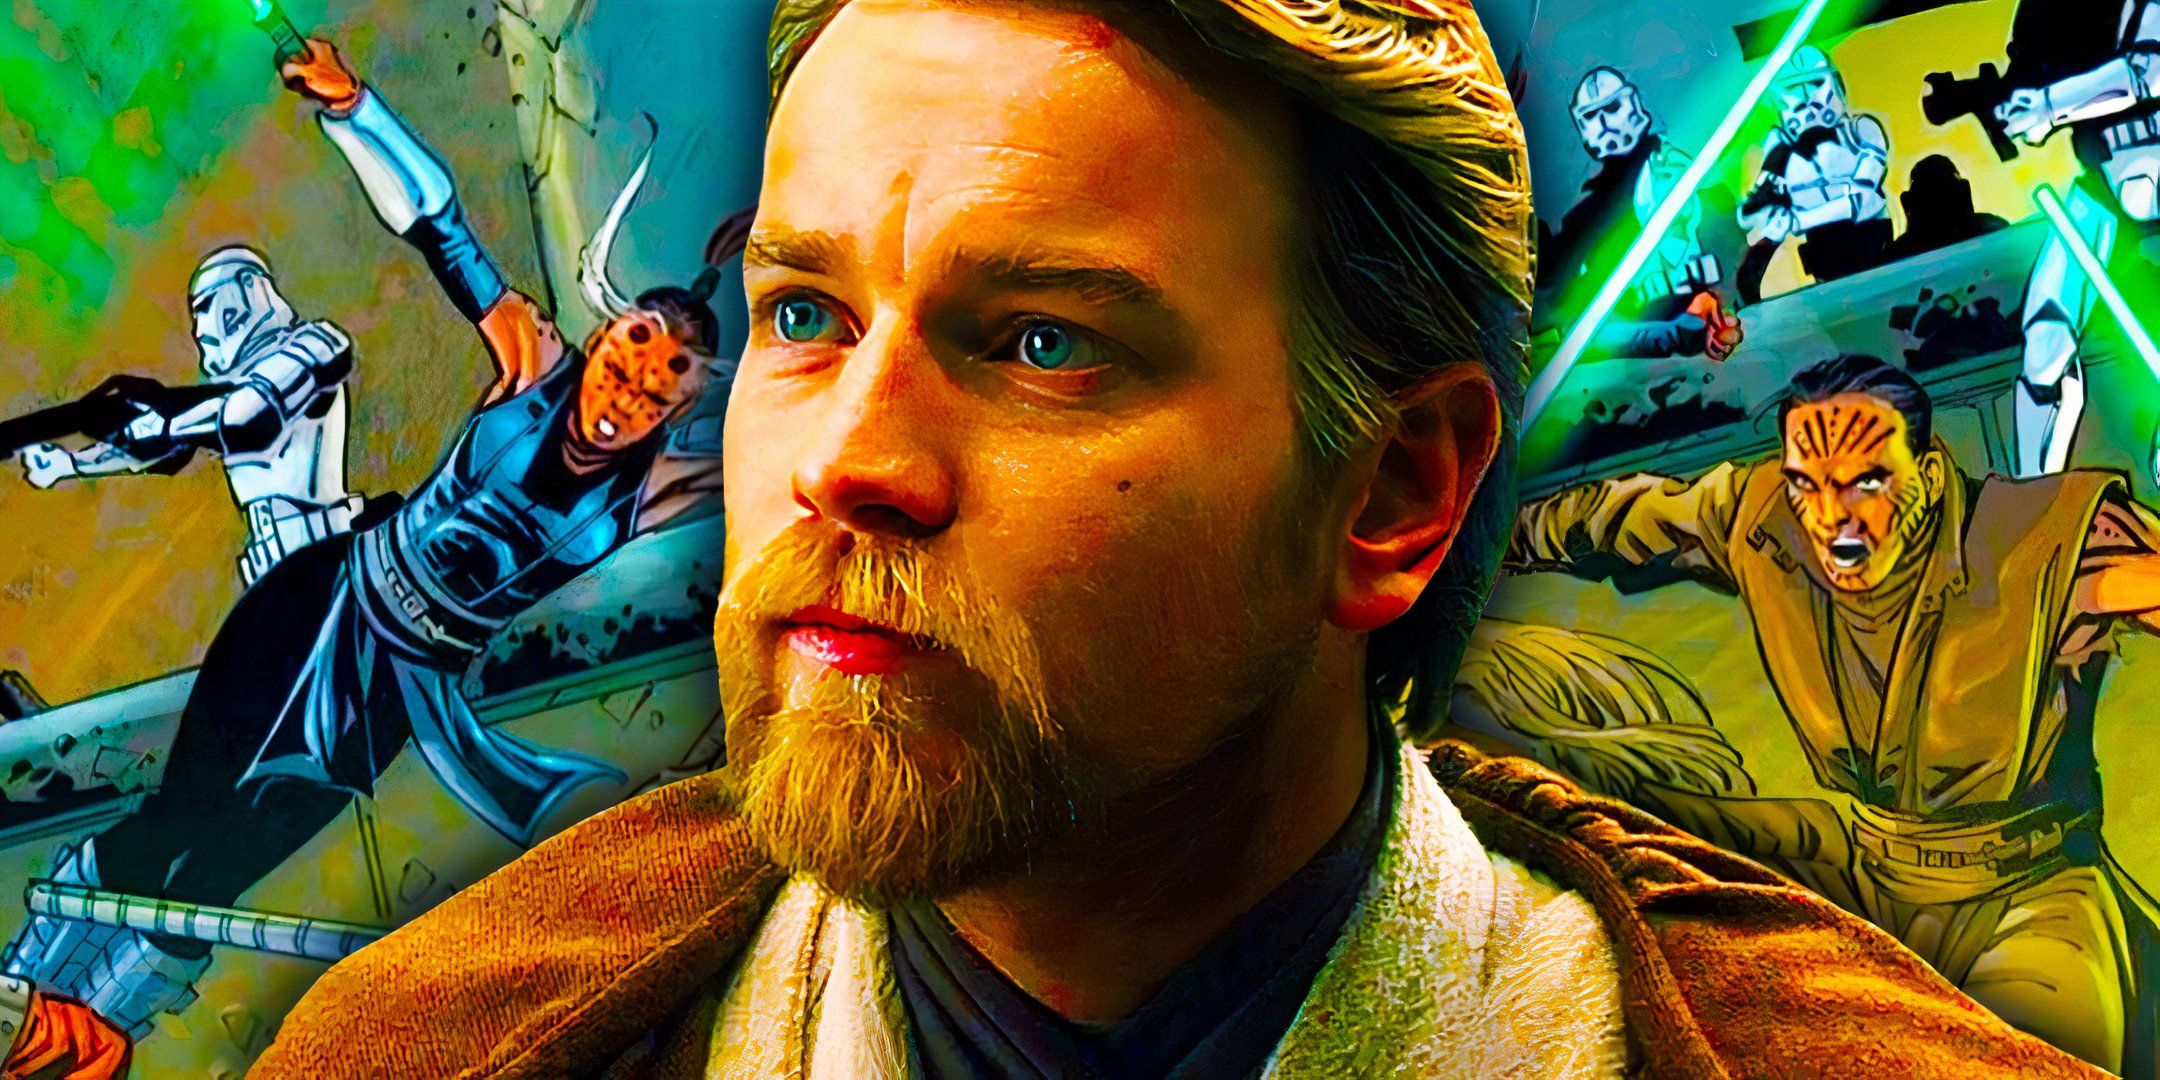 Ewan McGregor's Obi-Wan Kenobi in Revenge of the Sith, edited over a Star Wars comic